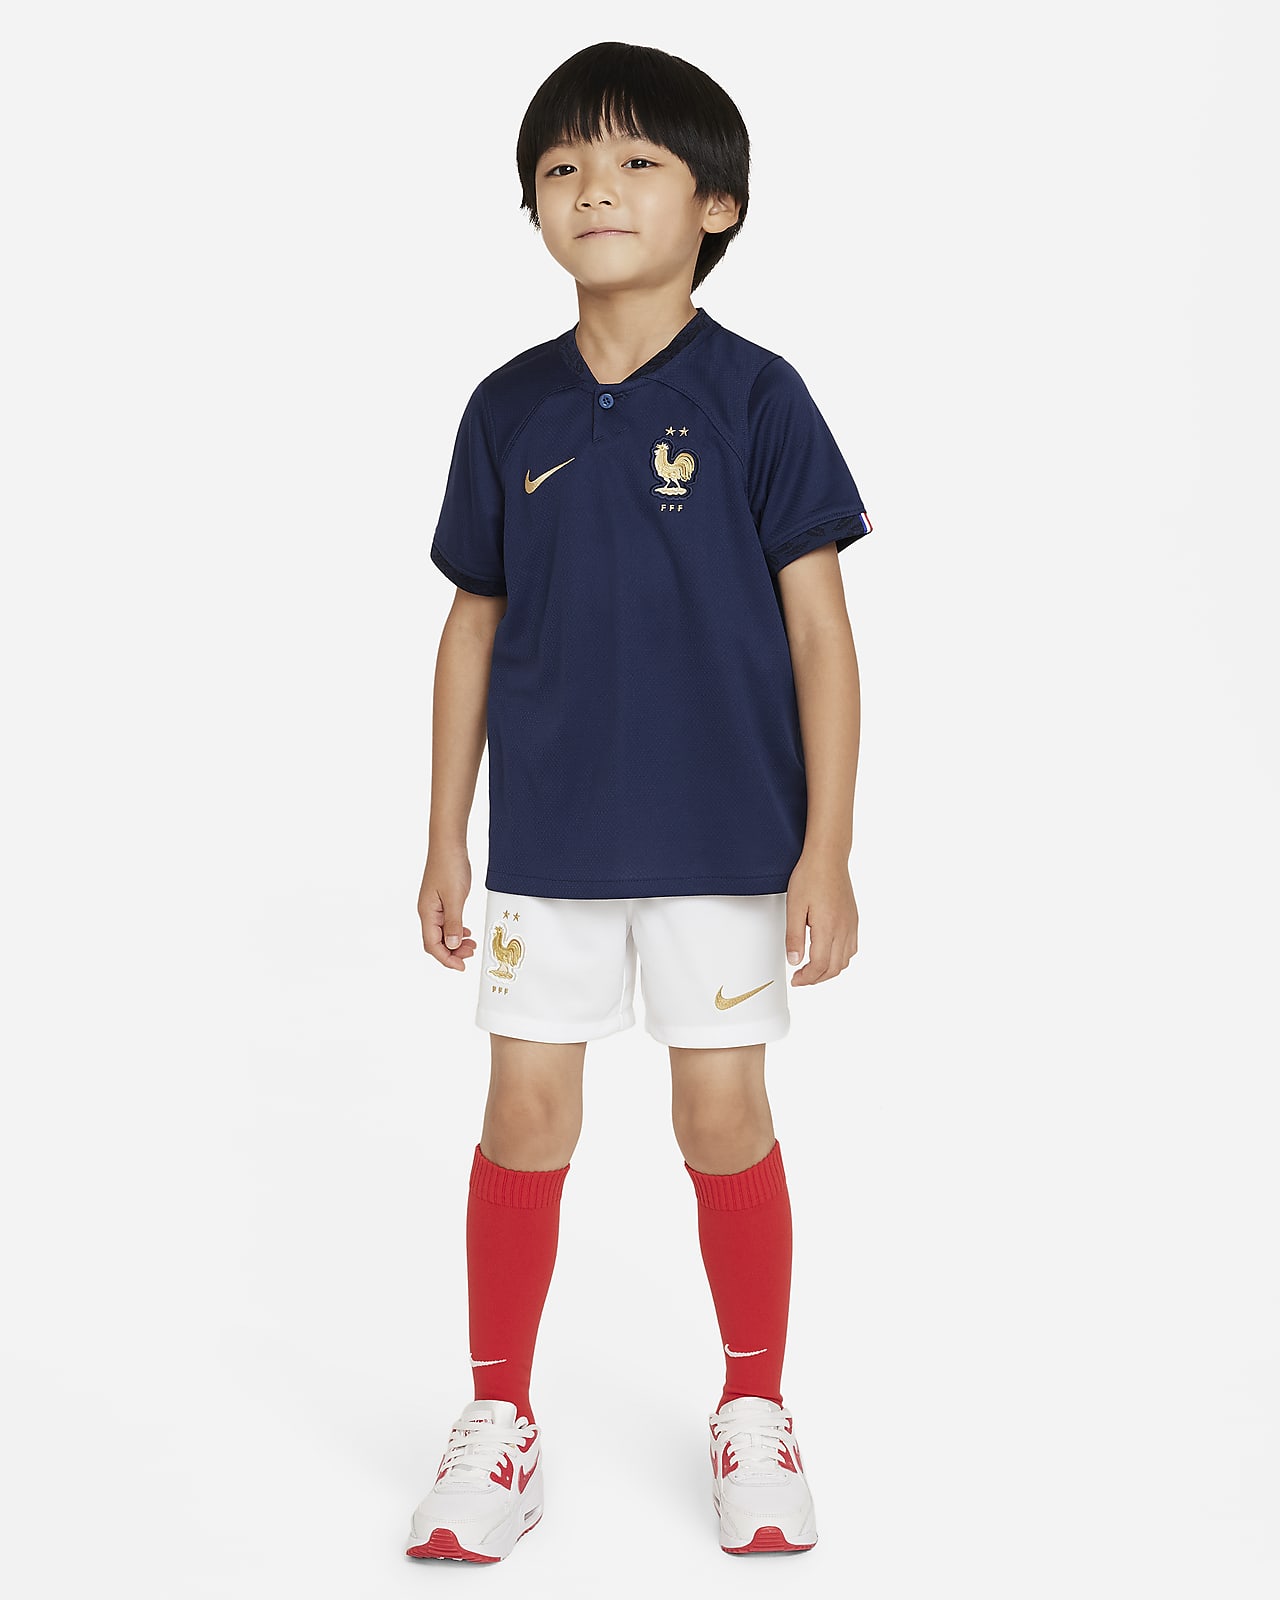 Primera equipación FFF 2022/23 Equipación de fútbol Nike - Niño/a pequeño/a